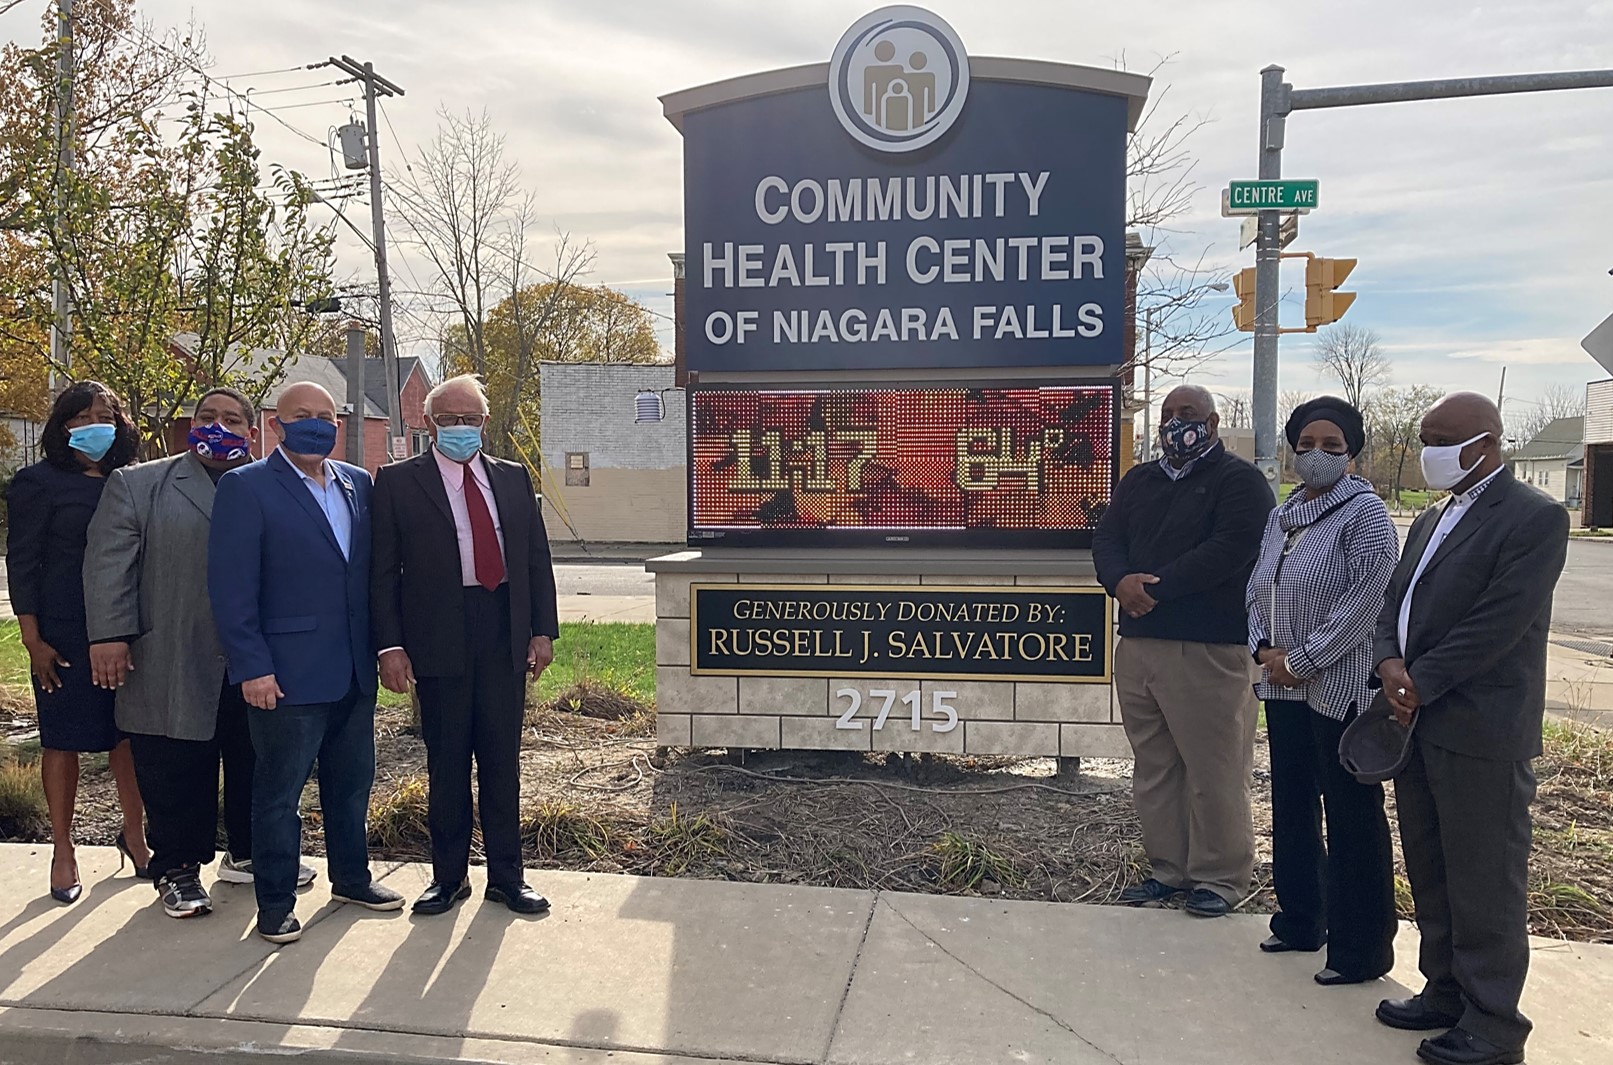 Community Health Center of Niagara Falls Honors Russell J. Salvatore